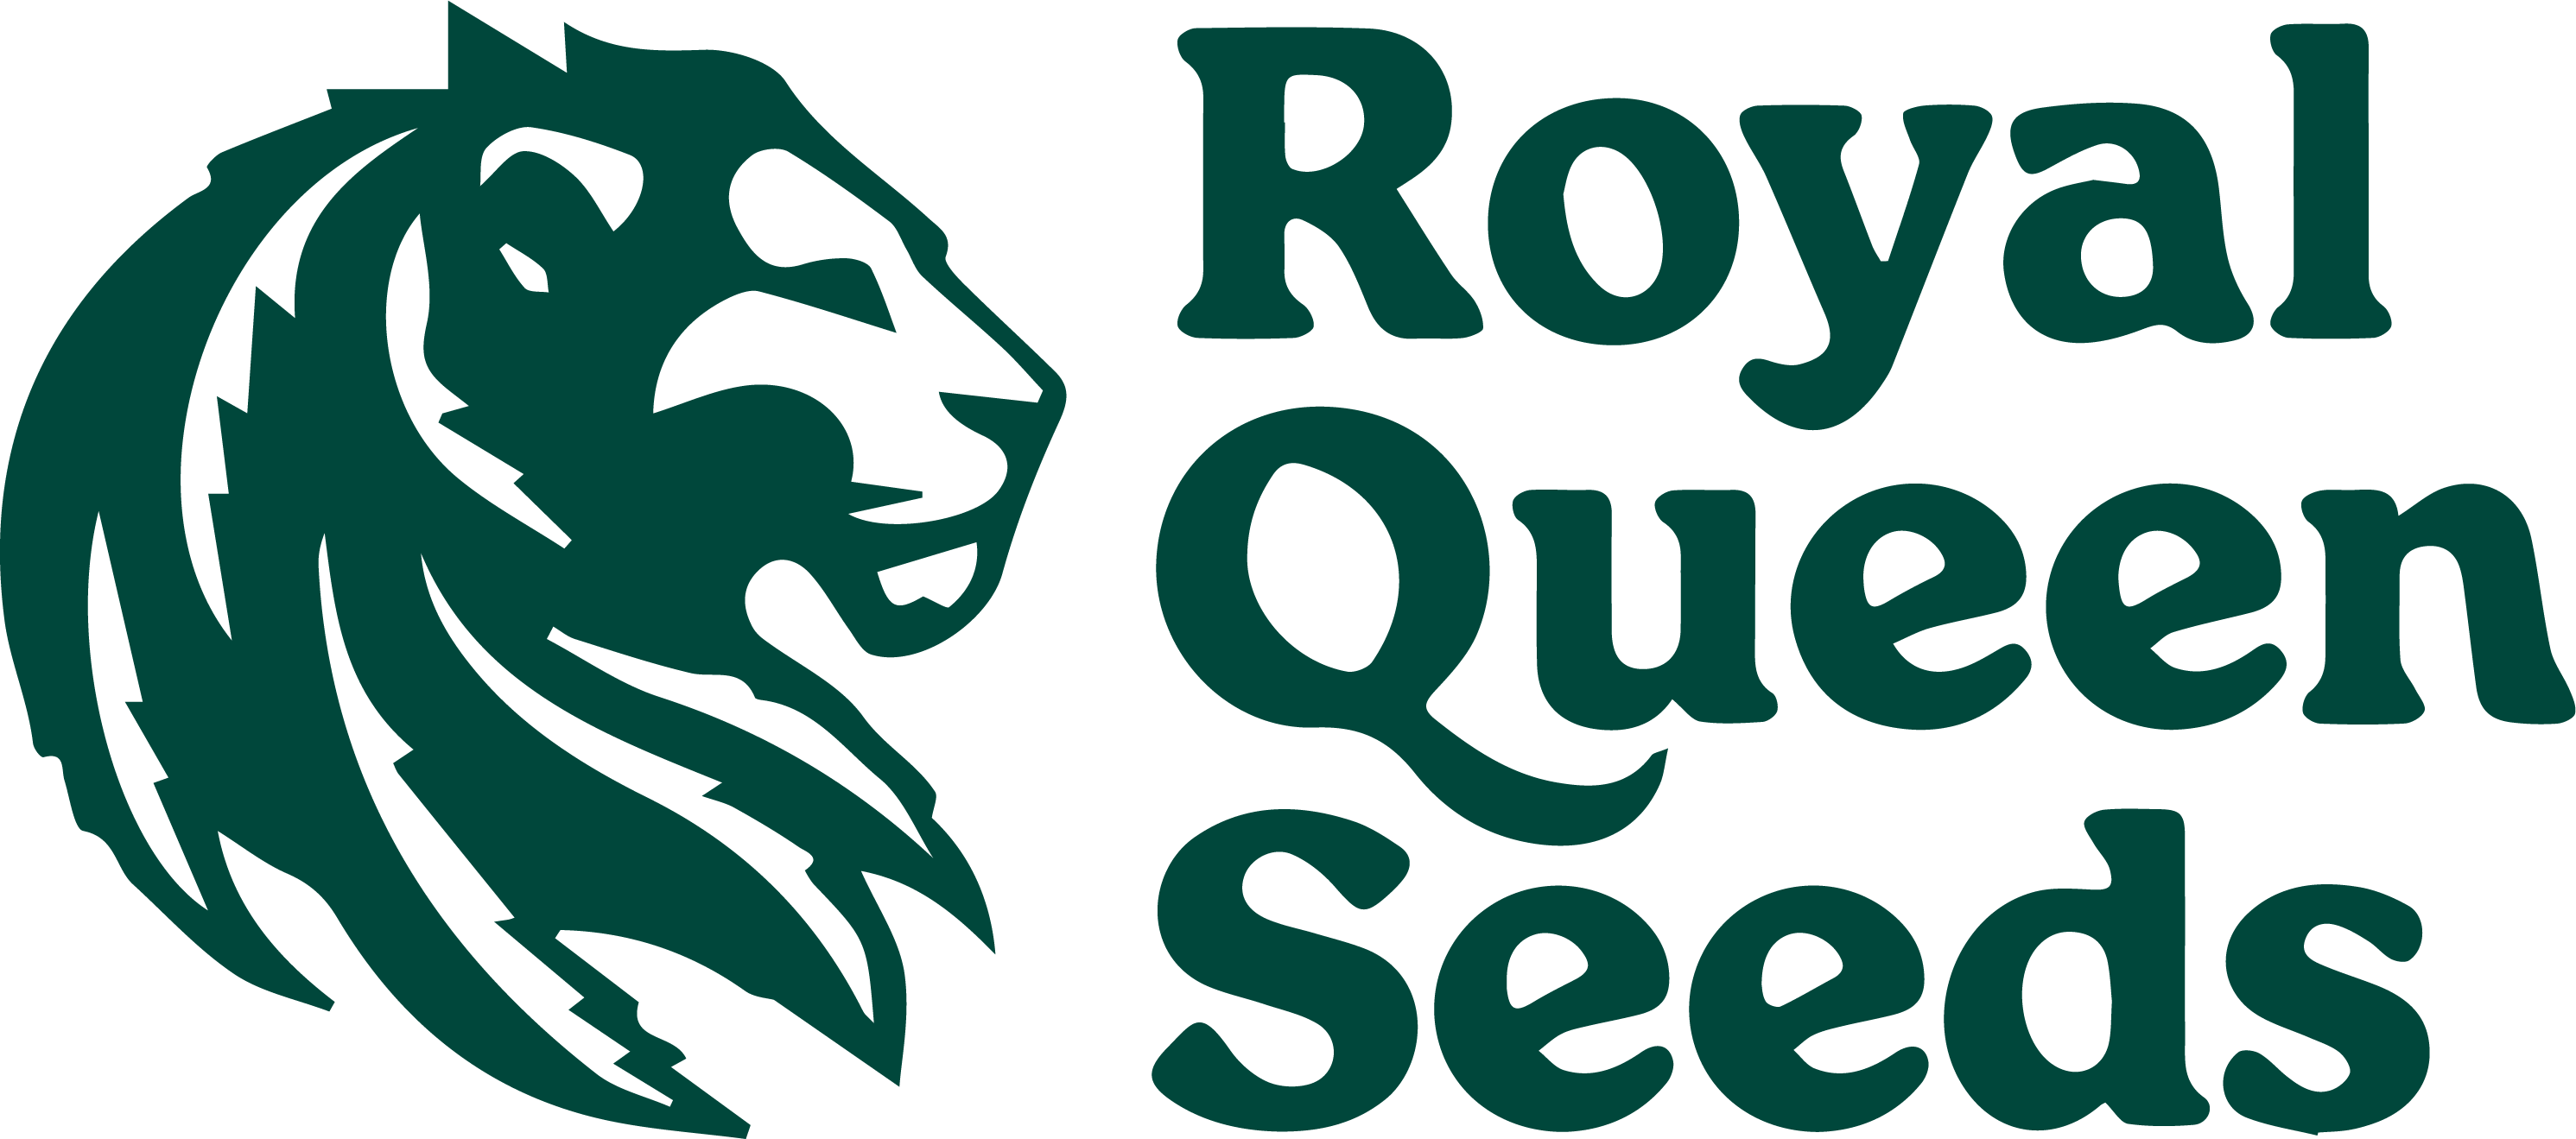 Royal Queen Seeds - Autoflower cannabis seeds - F1 - Hybrid Auto